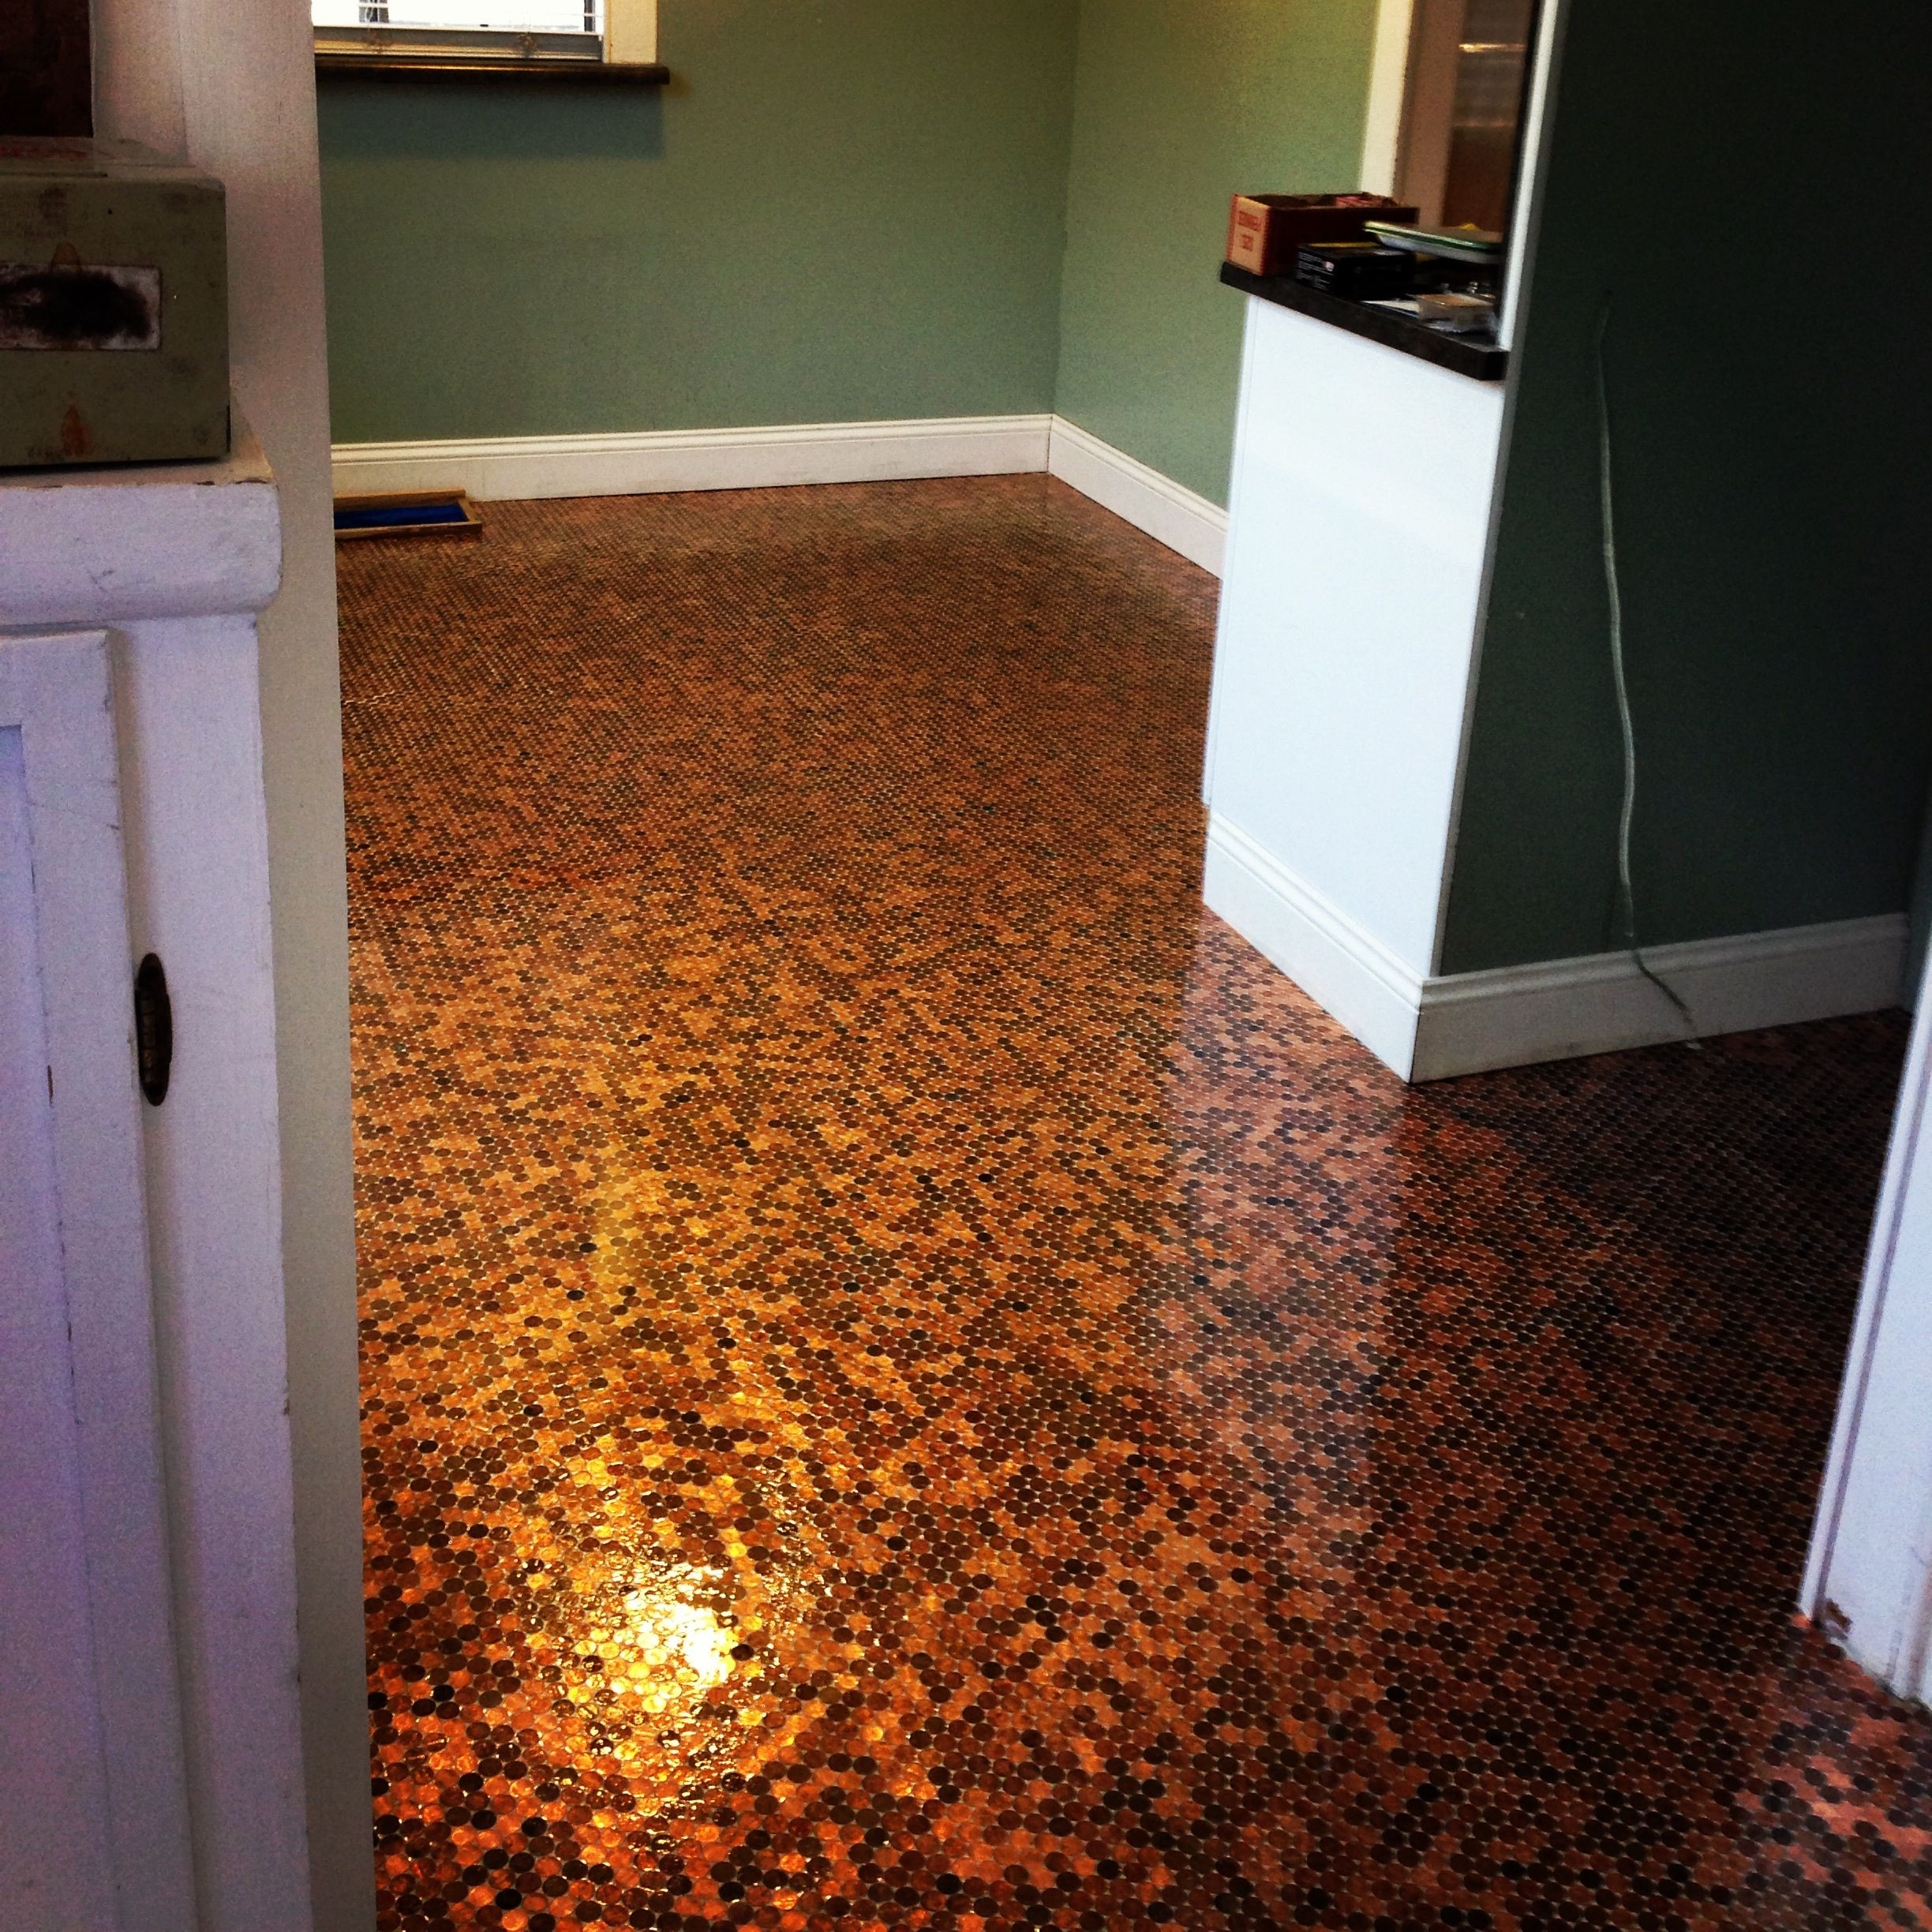 Best ideas about DIY Kitchen Floor
. Save or Pin pennyfloor diy flooring This is my new kitchen floor Now.